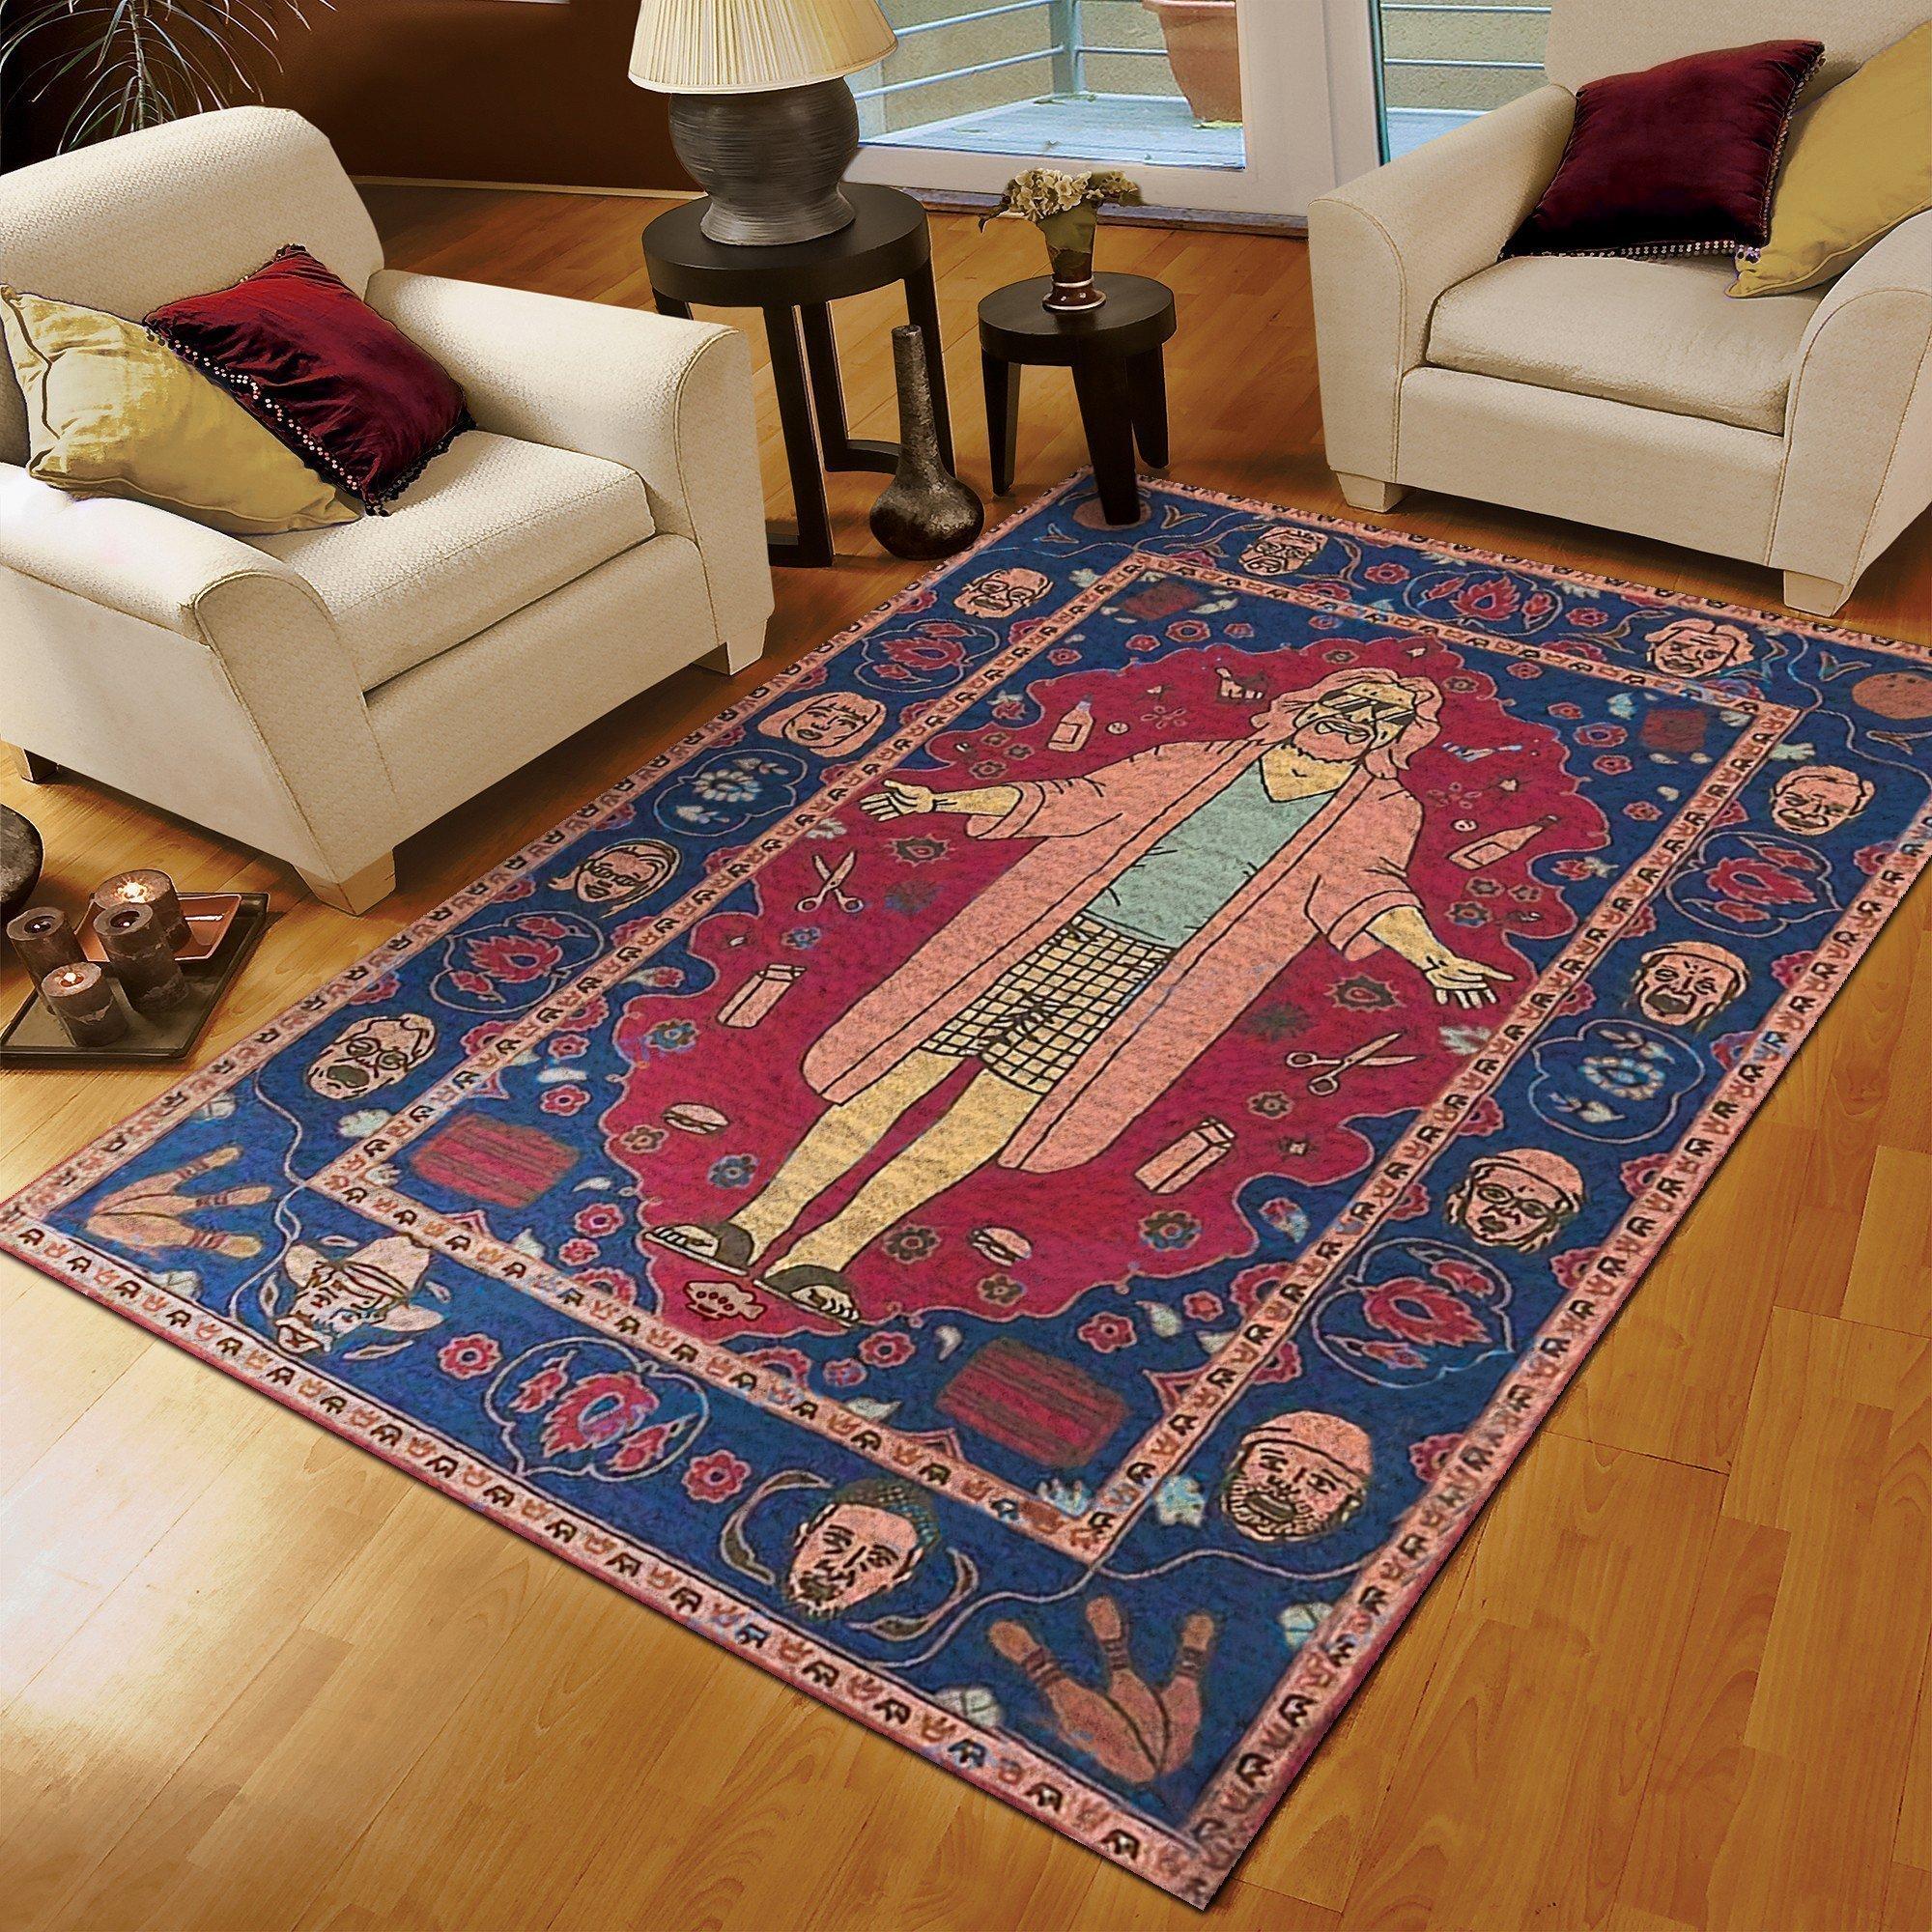 The big lebowski rug - maria